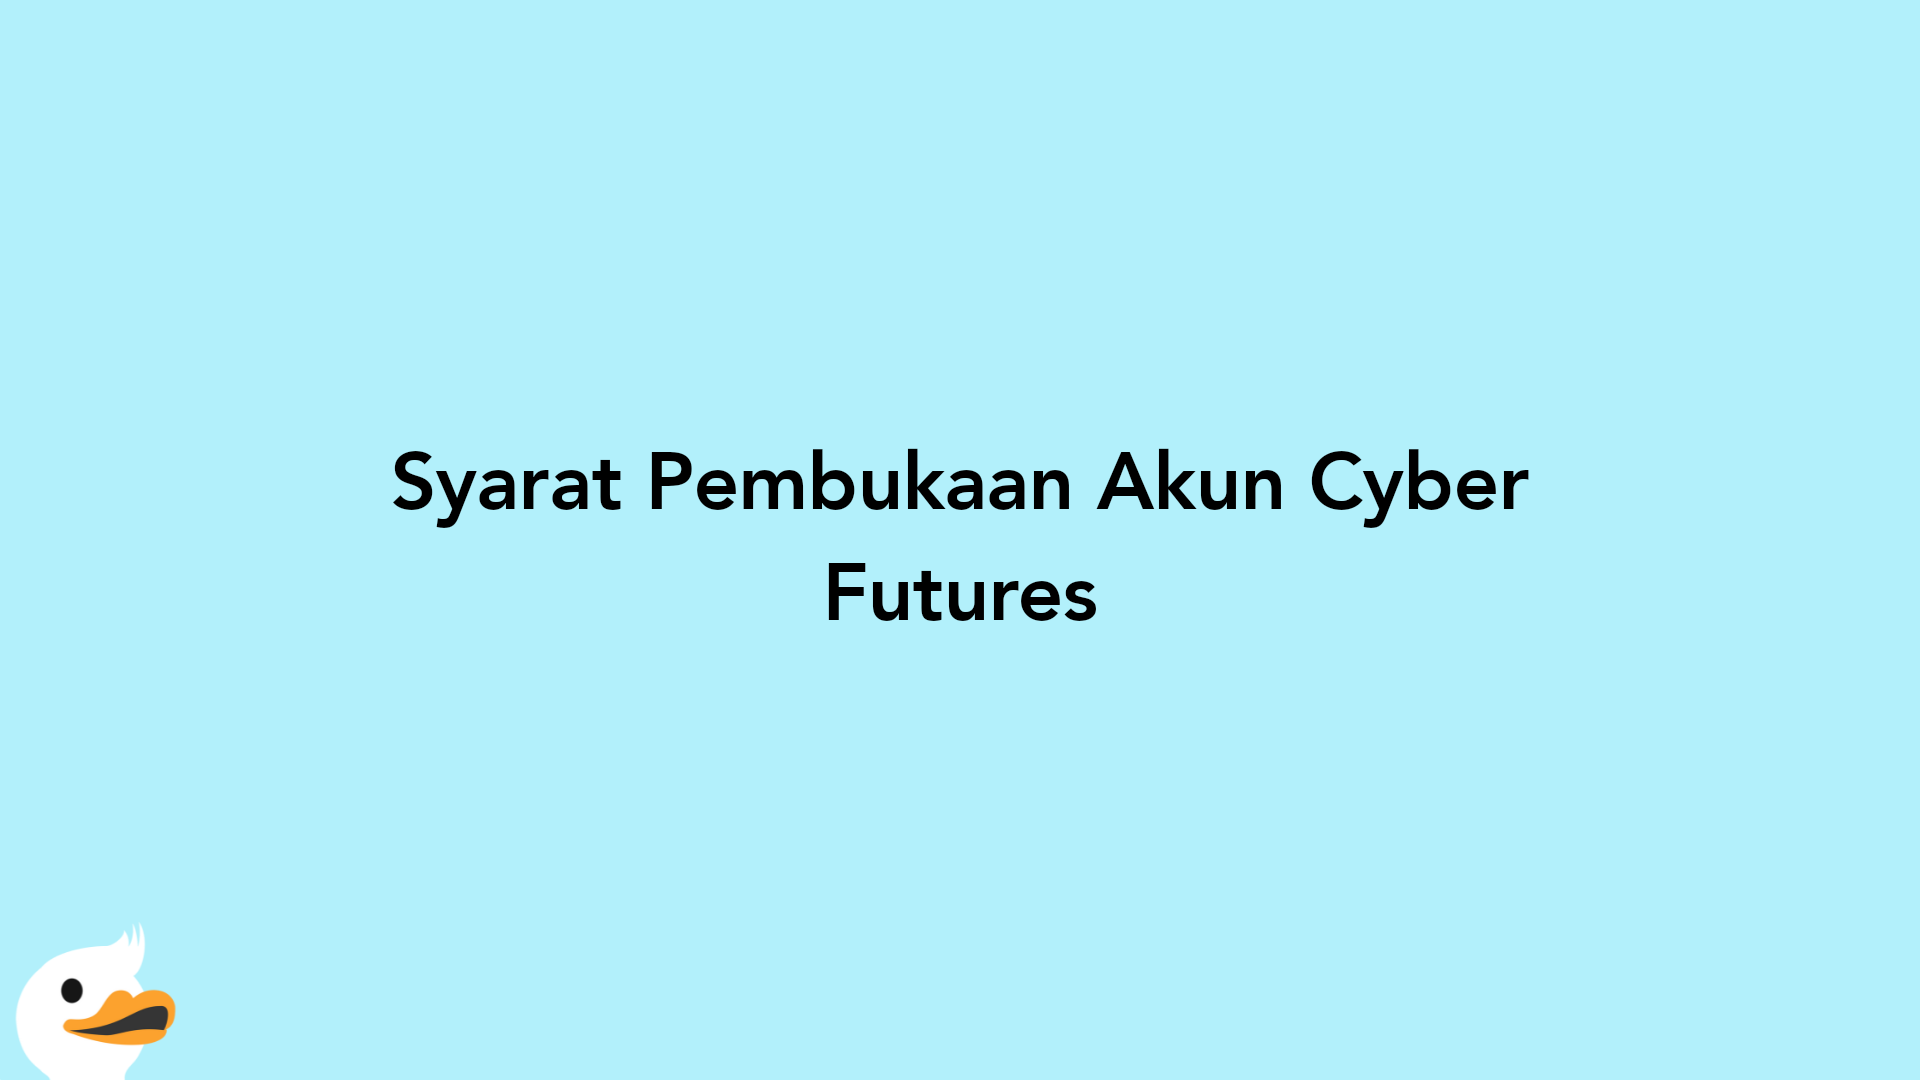 Syarat Pembukaan Akun Cyber Futures